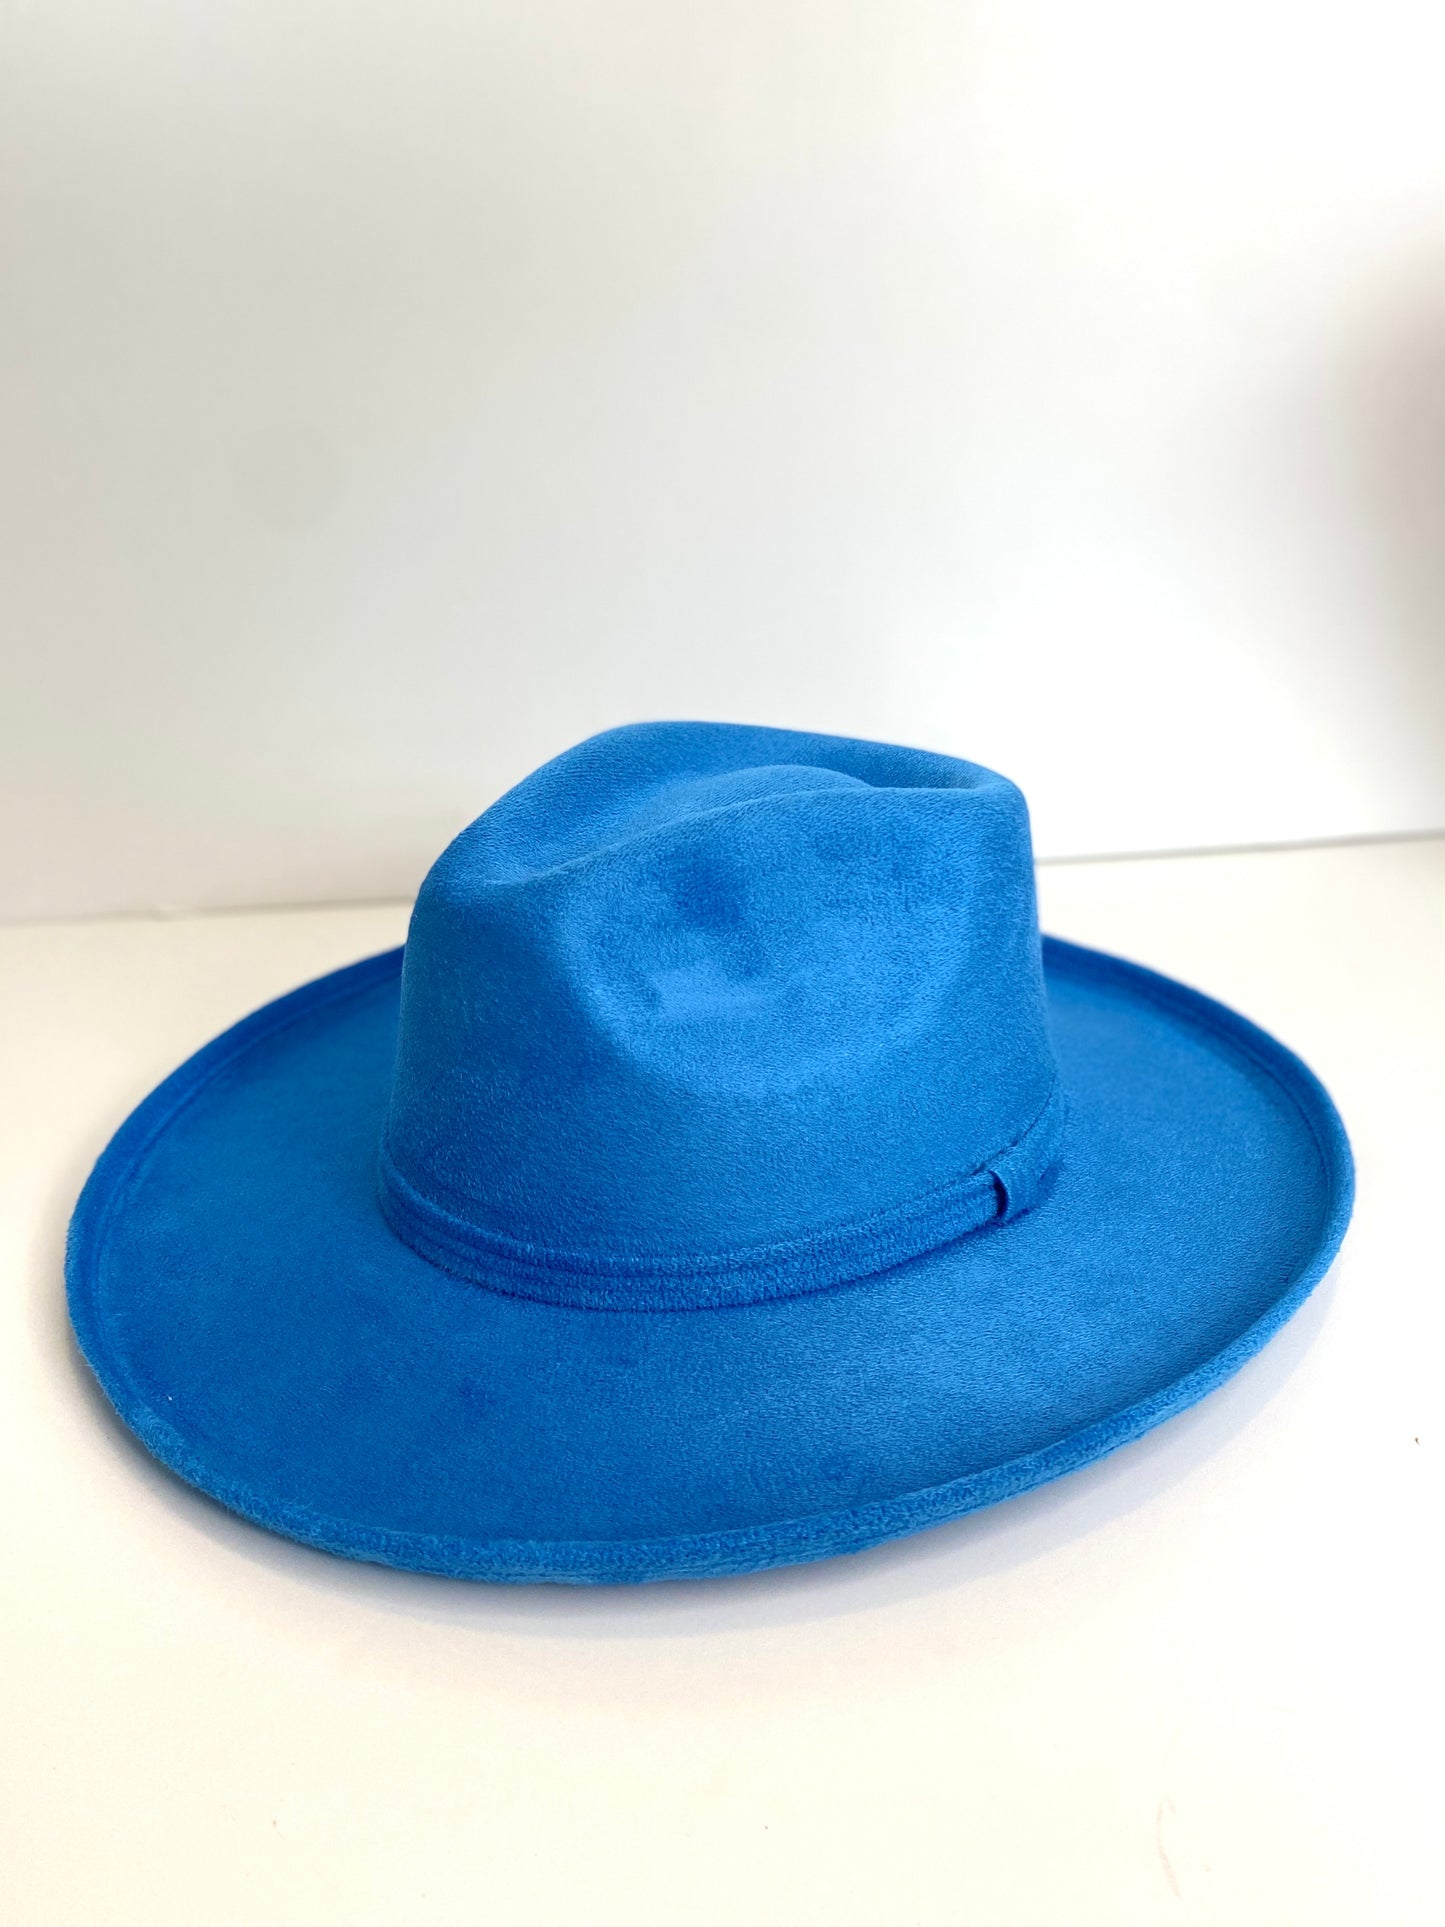 Vegan Suede Rancher Hat - Pencil Brim - Royal Blue